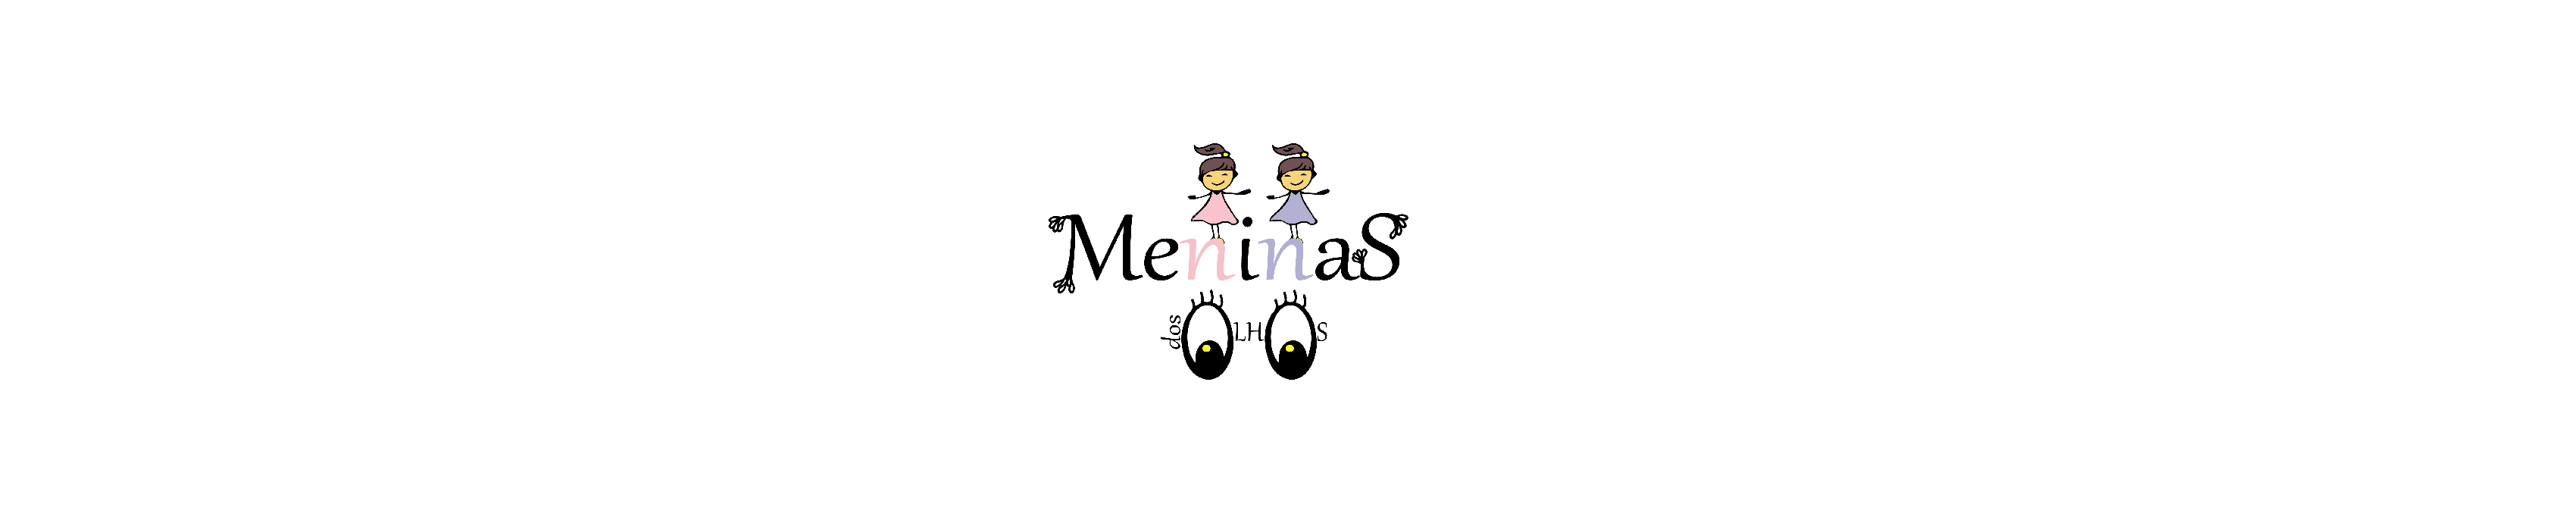 MENINAS DOS OLHOS's profile banner